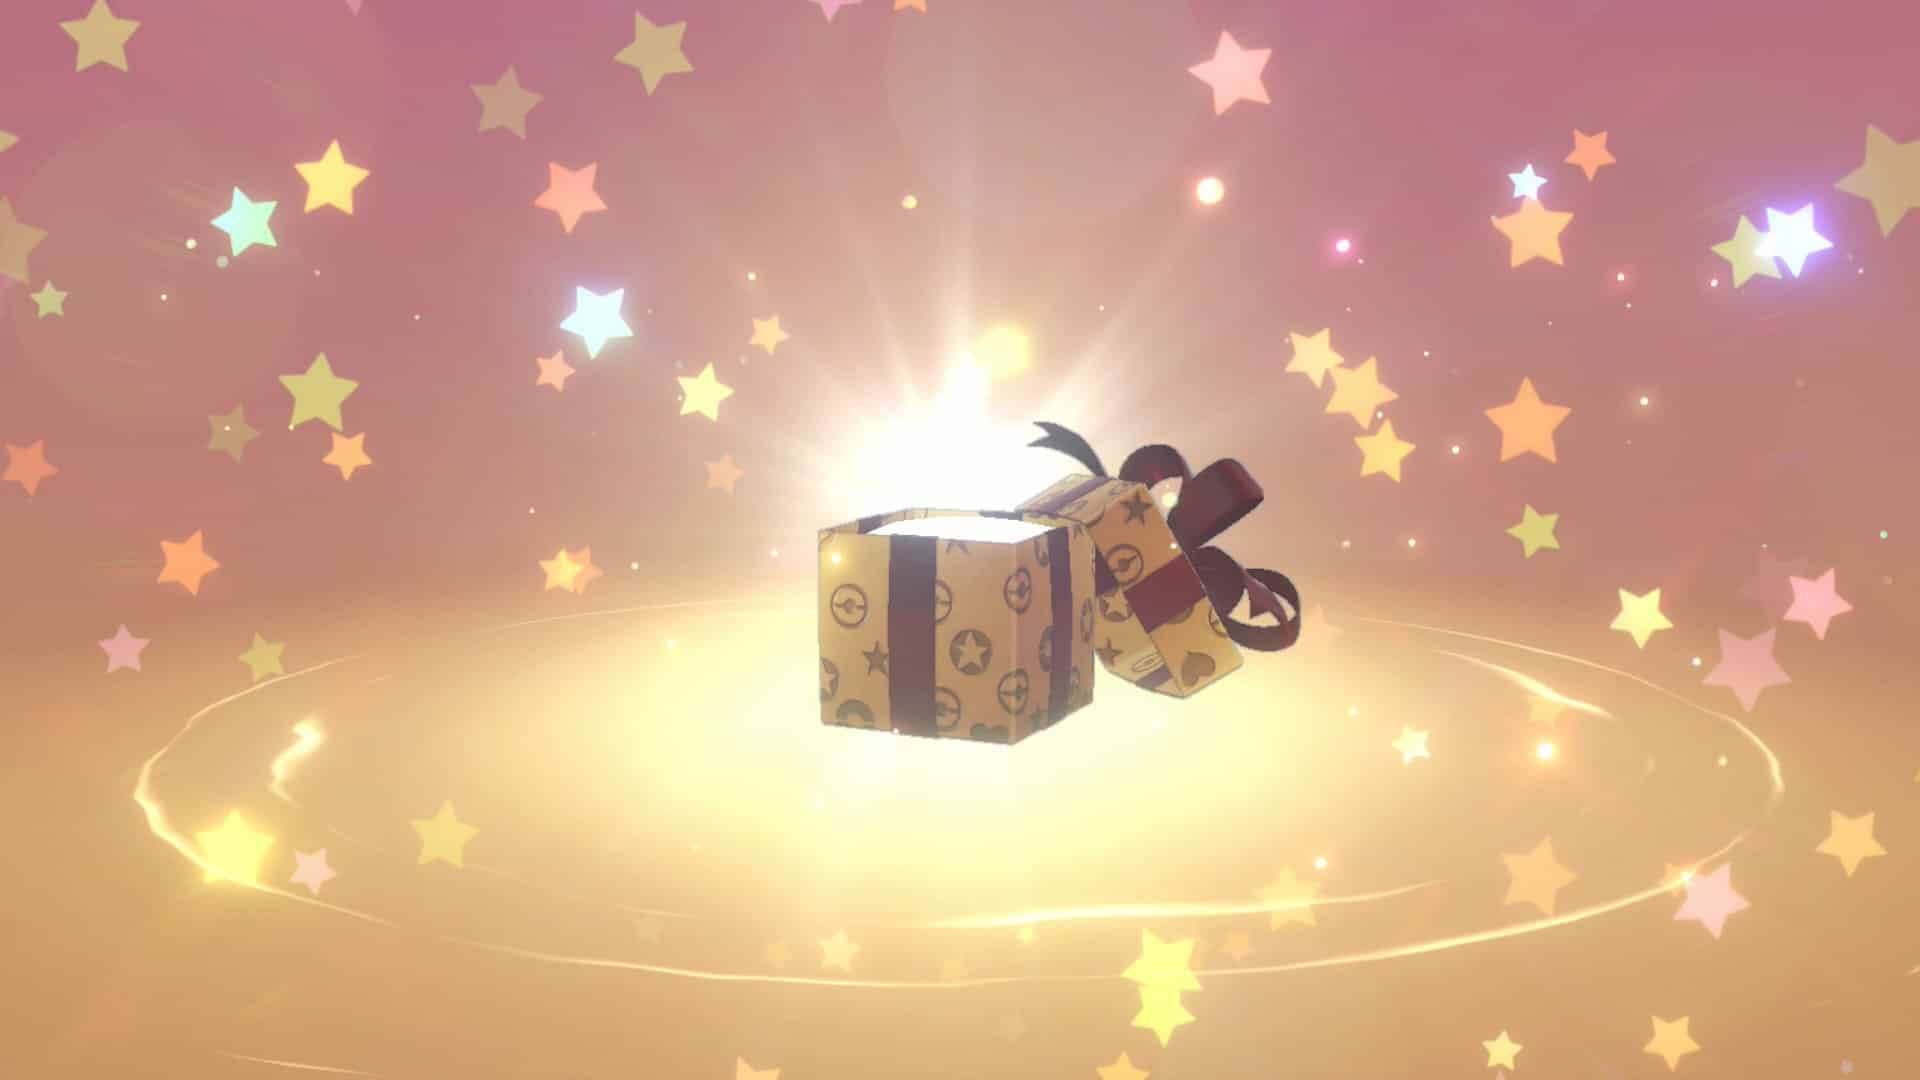 Pokemon Legends Arceus Mystery Gift codes – Free rewards in 2023 - Dexerto